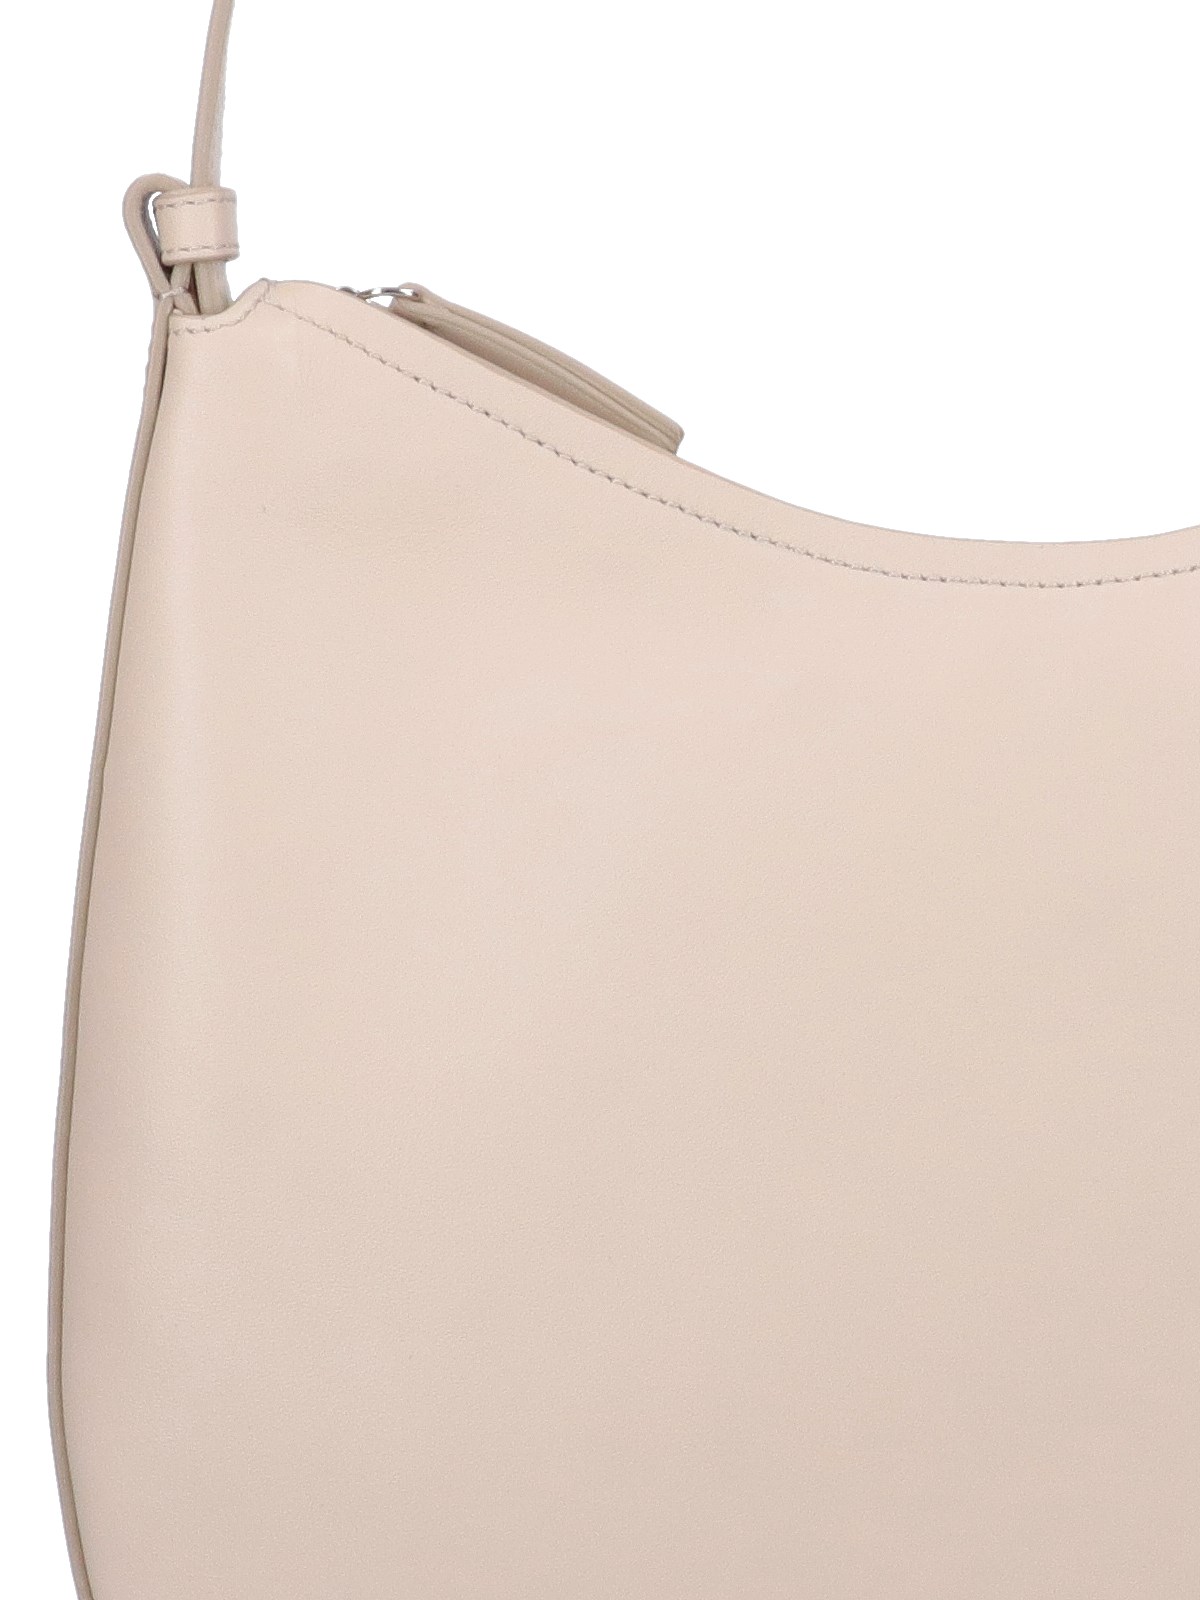 Aesther ekme 'soft mini hobo' shoulder bag available on SUGAR - 115673